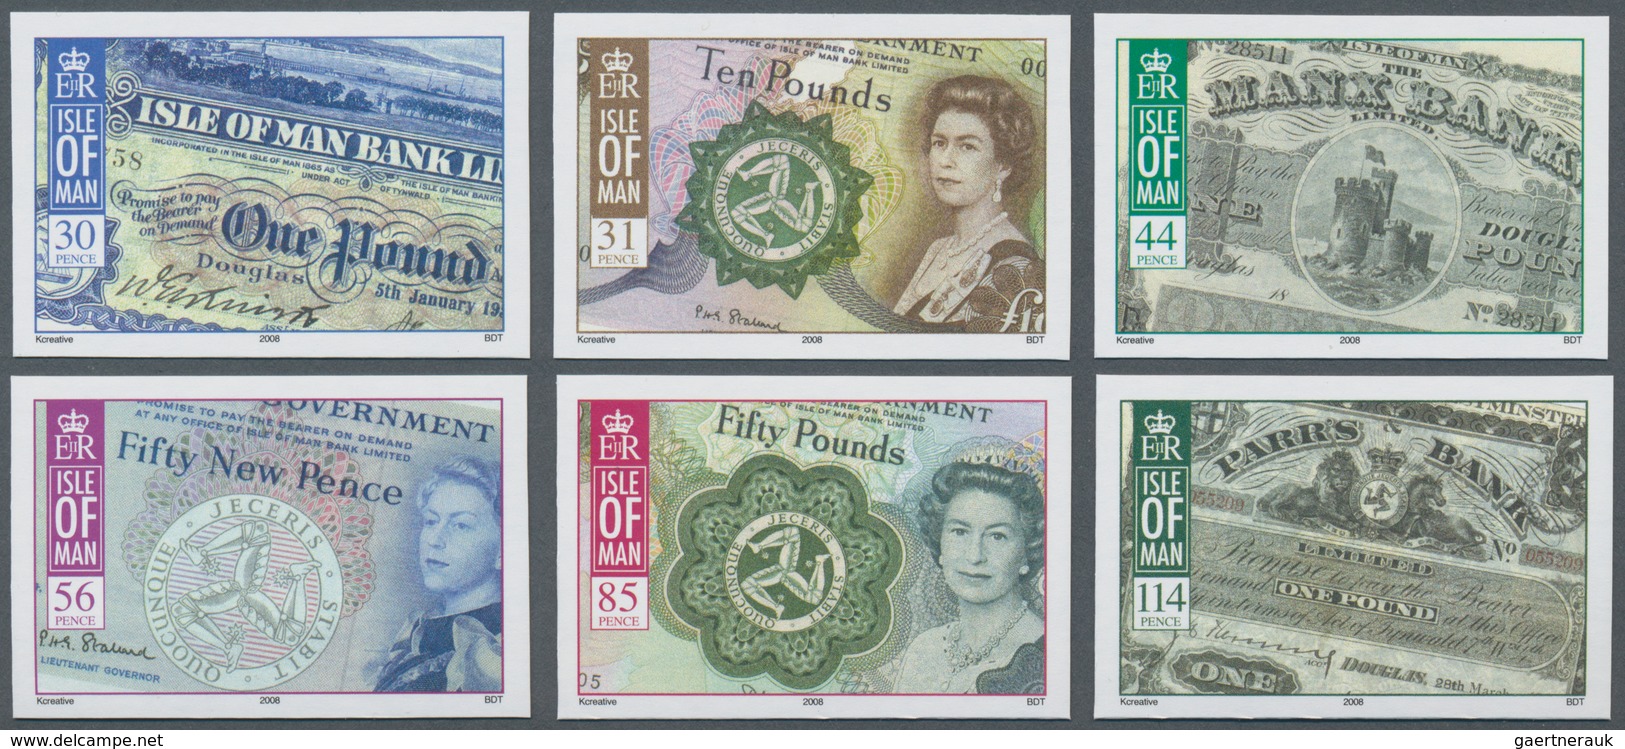 Großbritannien - Isle Of Man: 2008. Complete Set "Banknotes Of Isle Of Man" (6 Values) In IMPERFORAT - Man (Insel)